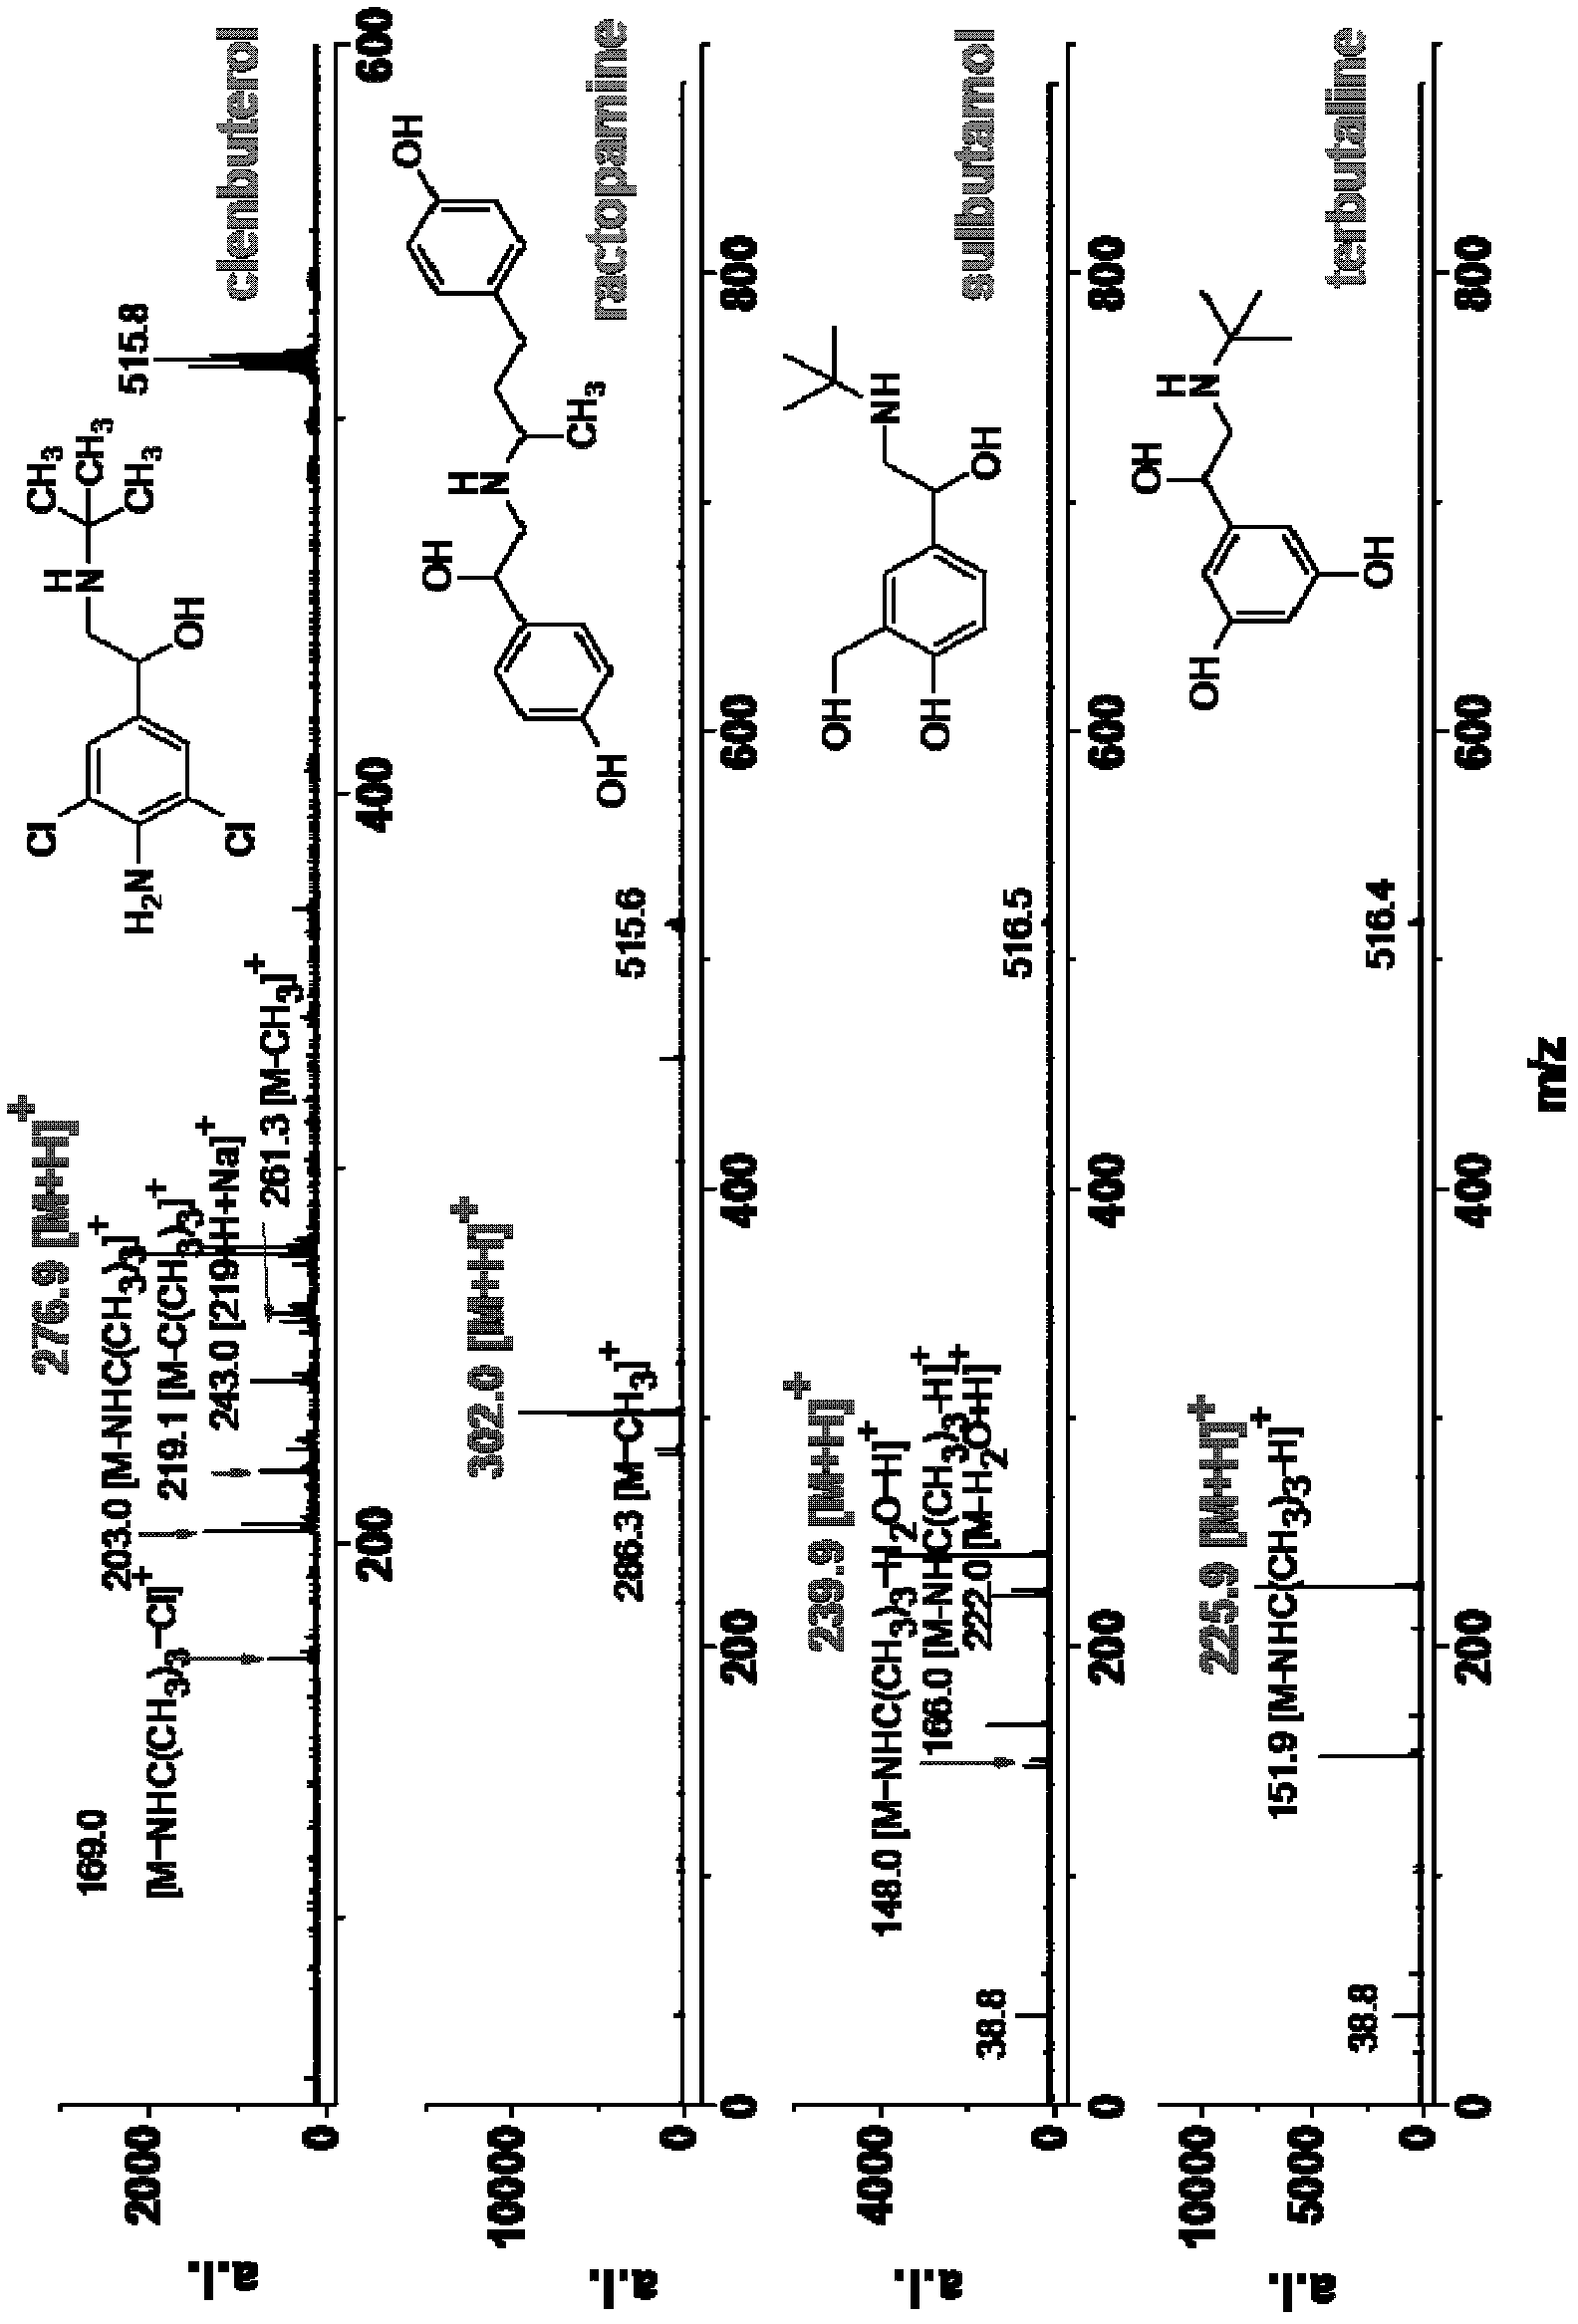 2,3,4,5,-tetra(3',4'-dihydroxyl phenyl)thiophene and application thereof as MALDI (matrix assisted laser desorption ionization) matrix in analyzing small molecules